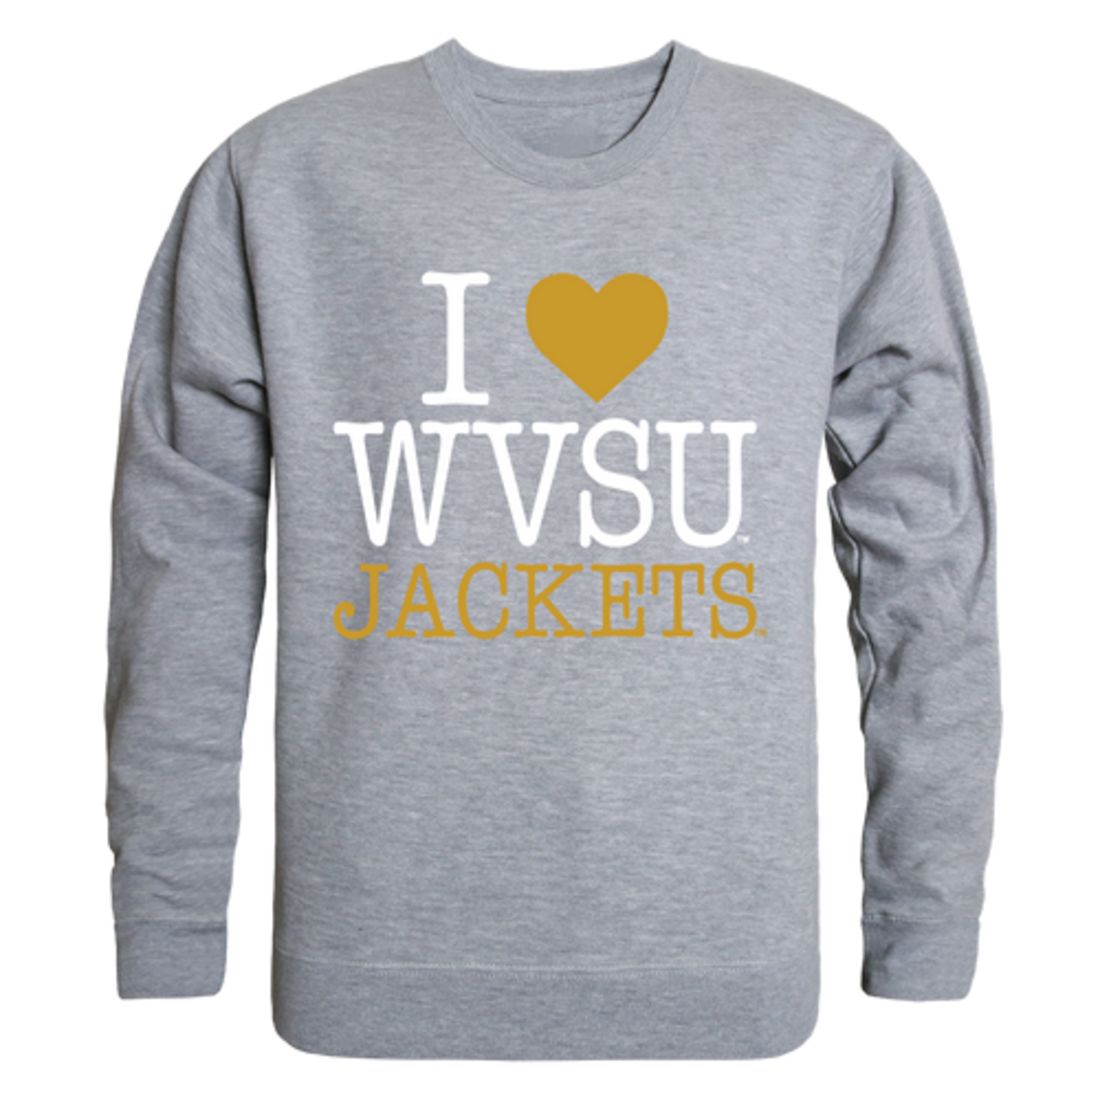 I Love WVSU West Virginia State University Yellow Jackets Crewneck Pullover Sweatshirt Sweater Heather Grey Large - image 1 of 2